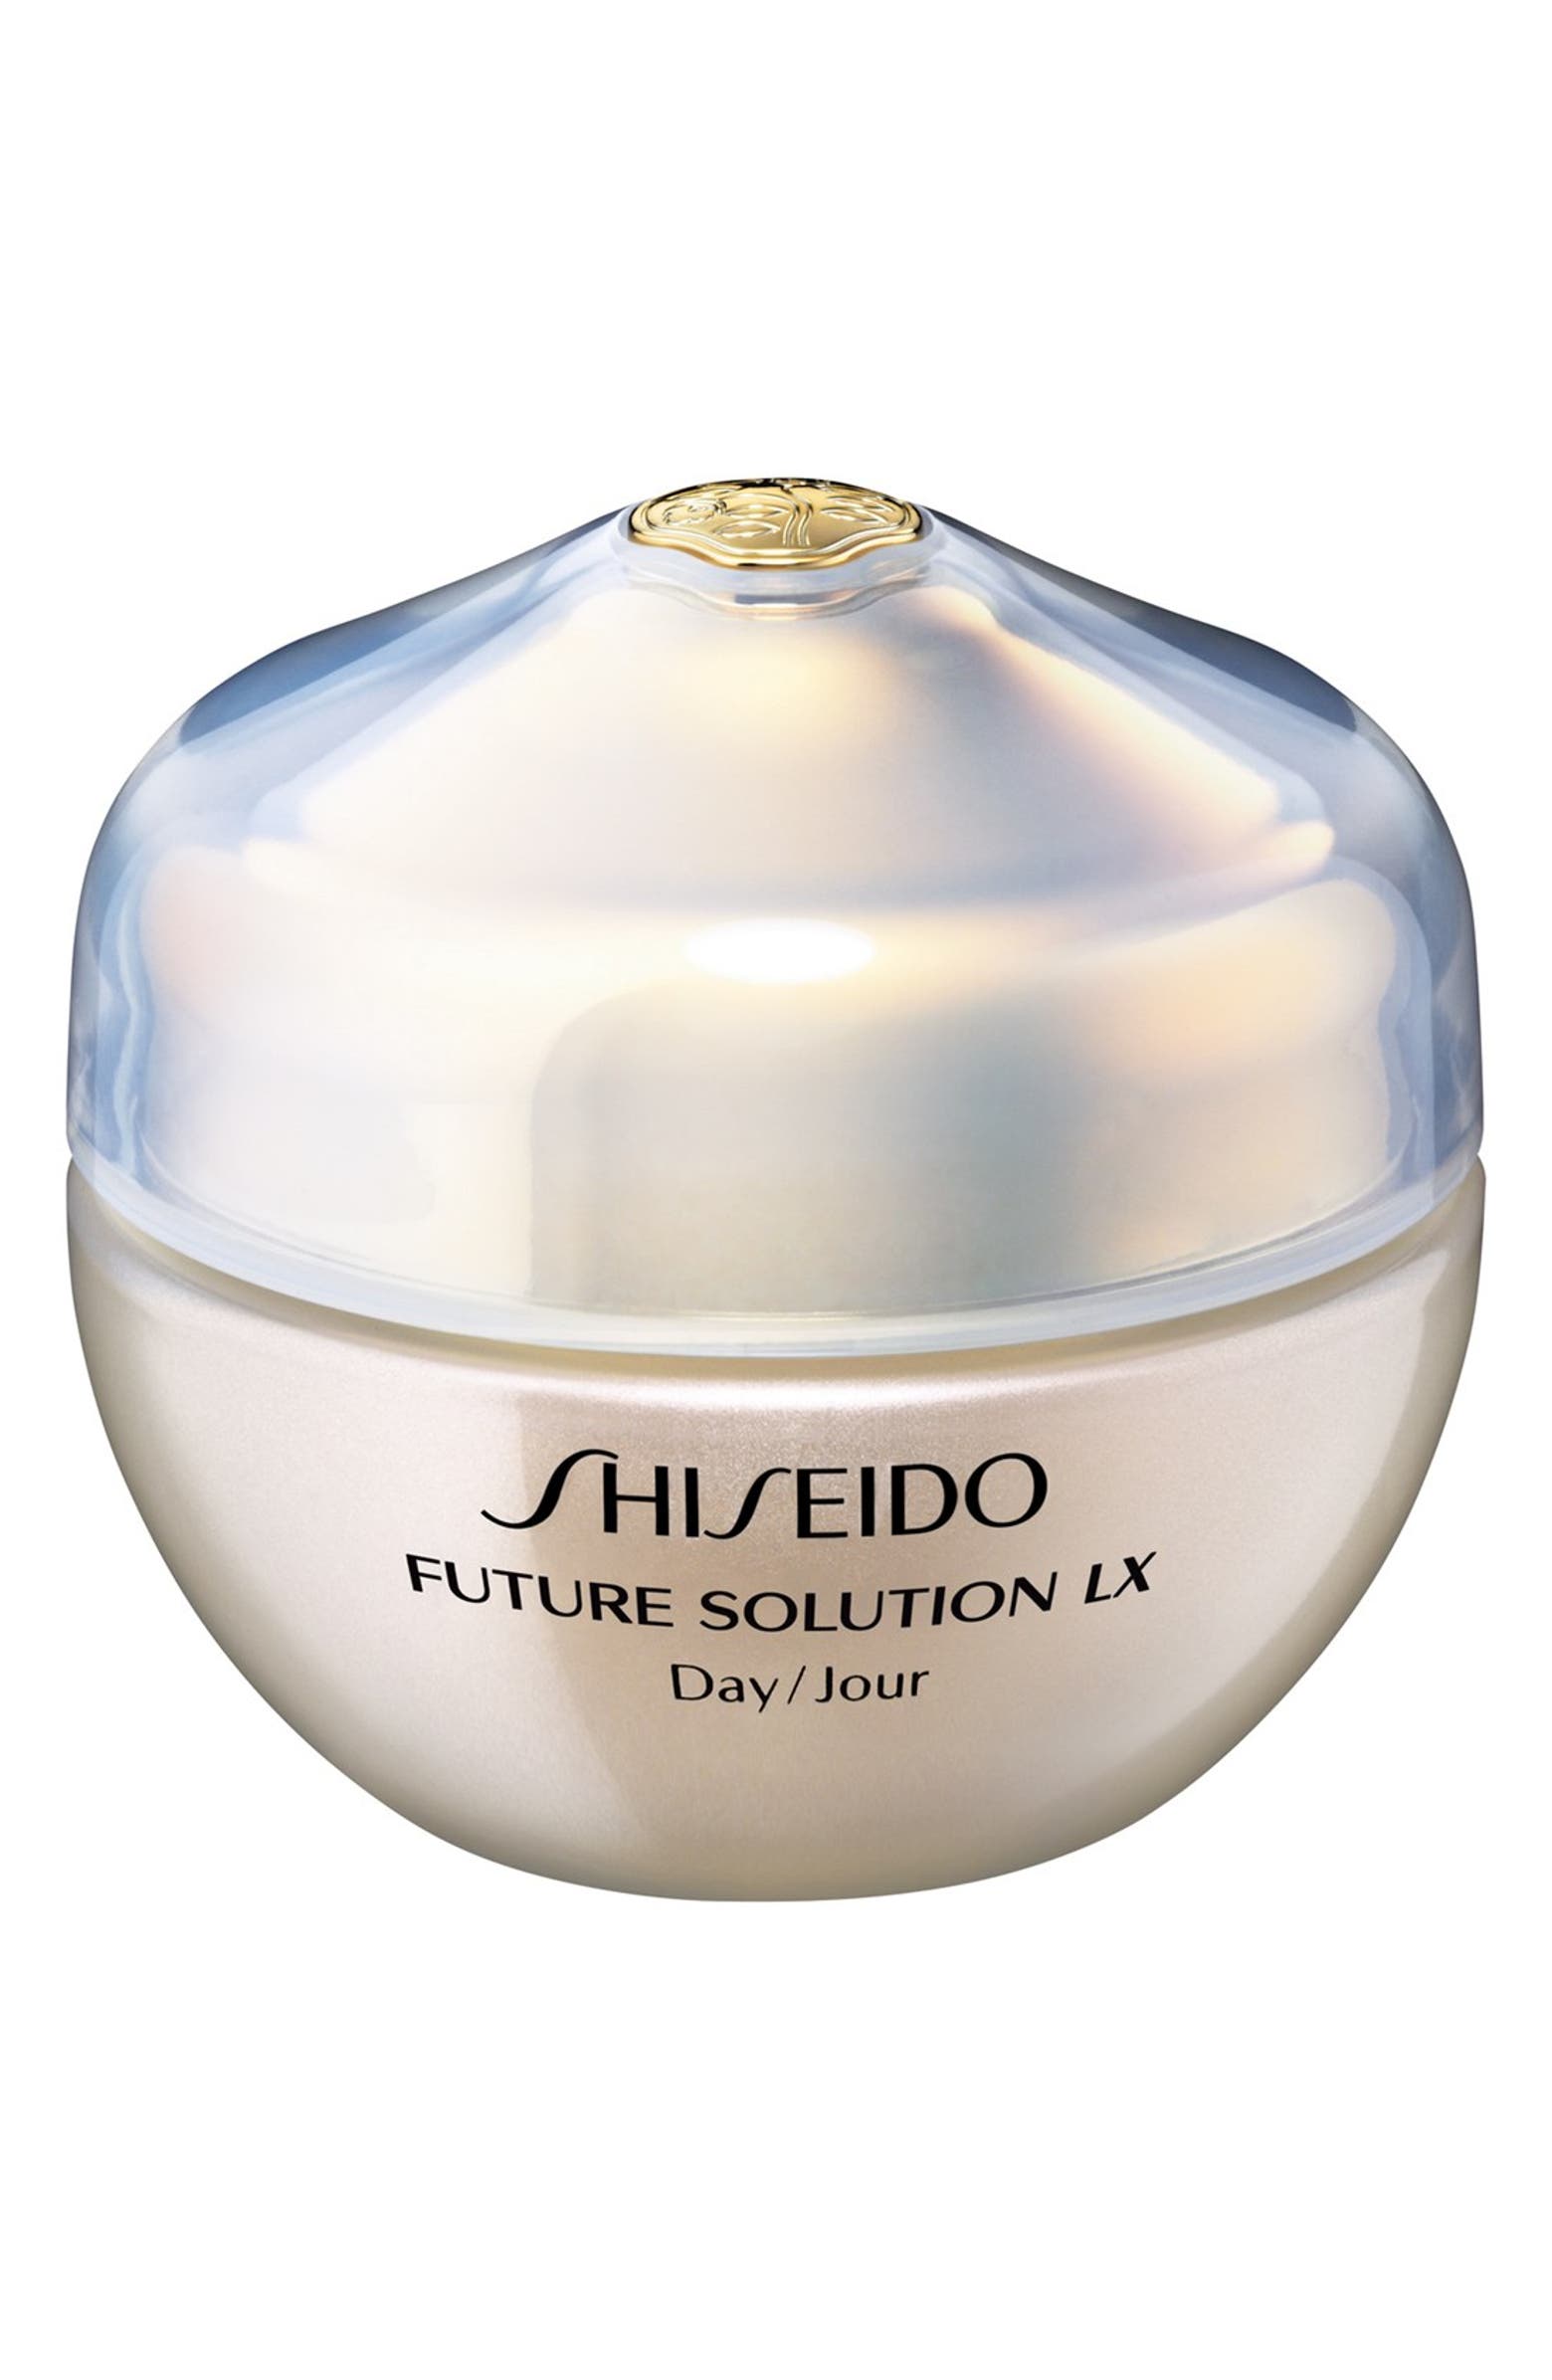 Shiseido 'Future Solutions LX' Total Protective Cream SPF 18 | Nordstrom